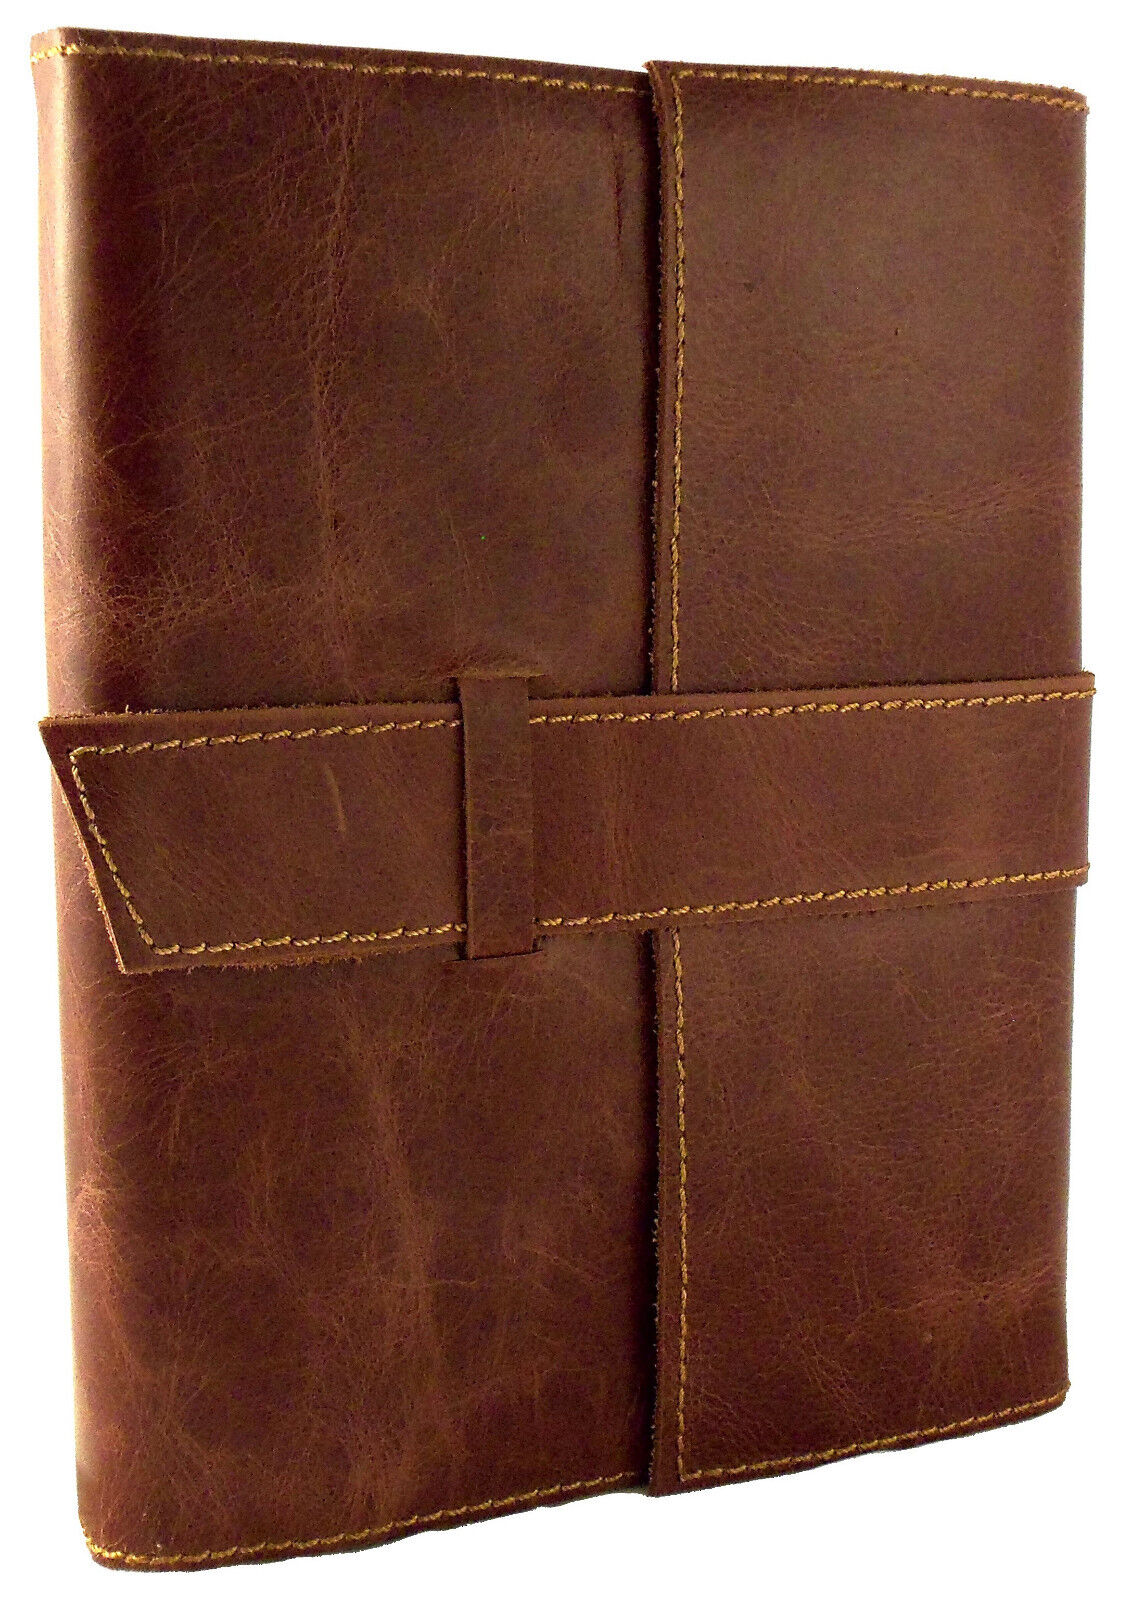 Leather Travel Journal Refillable Notebook Sketchbook Diary Men Women Kids Gift